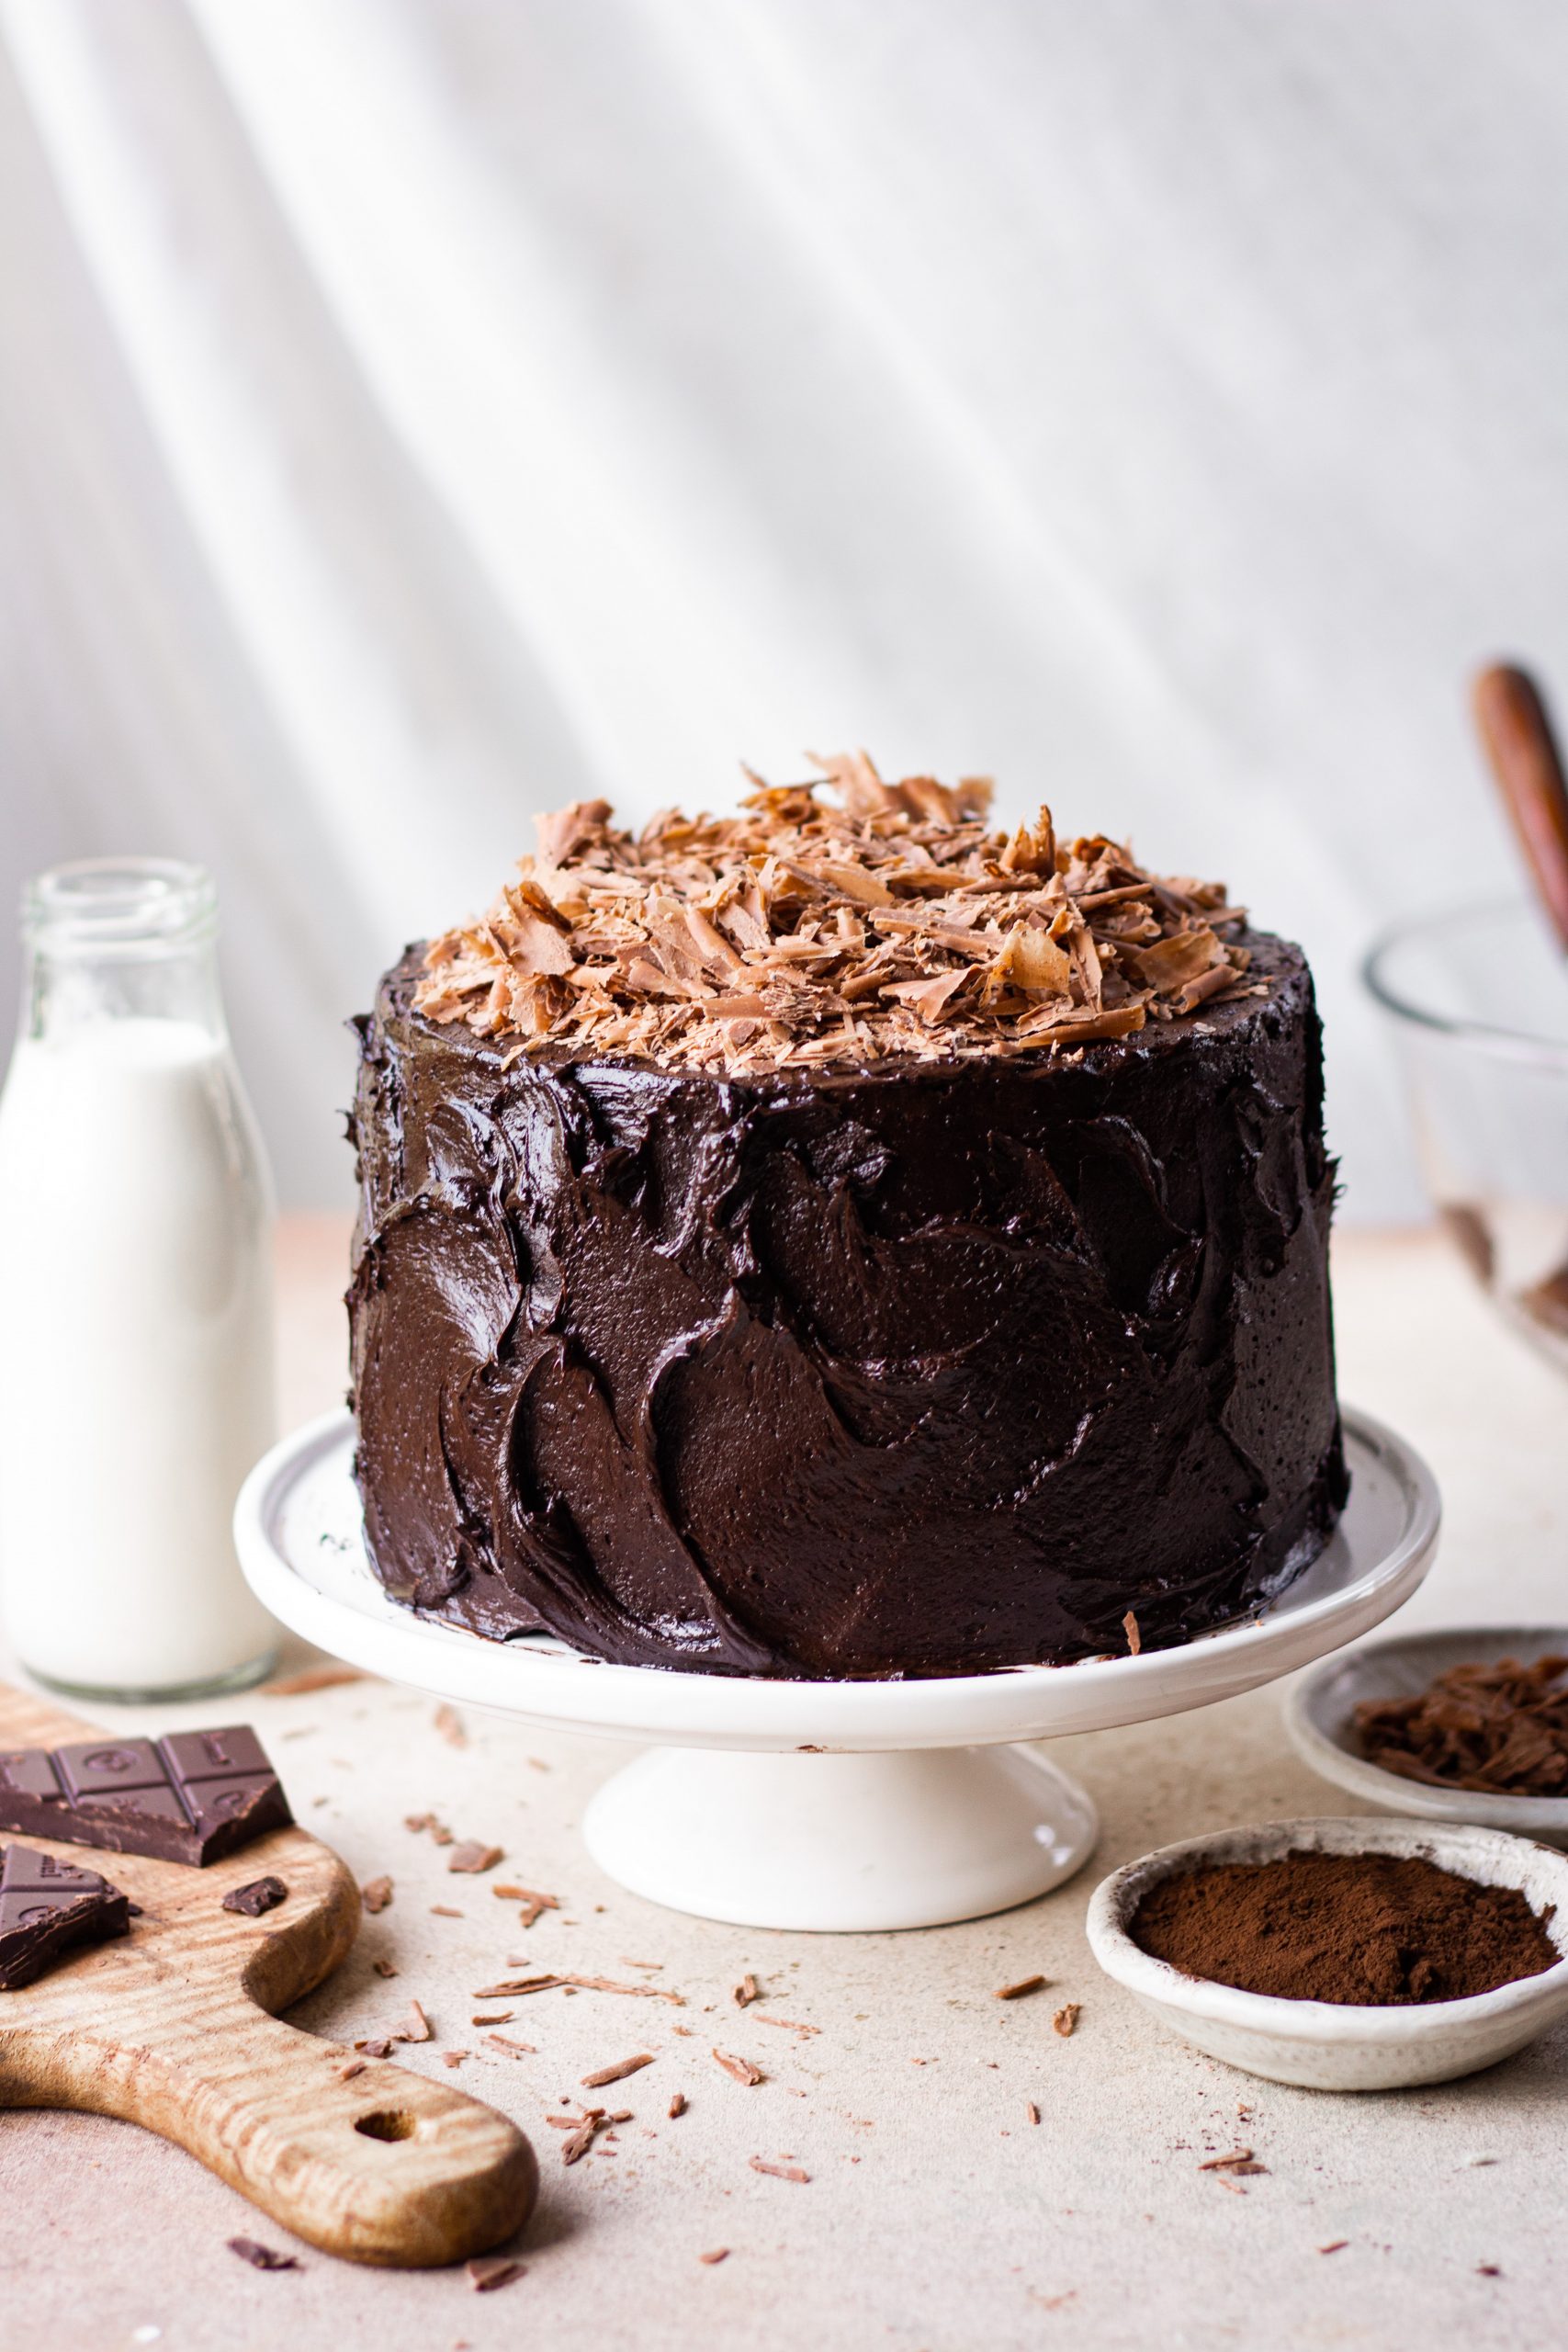 Classic Chocolate Cake Recipe How to Make It